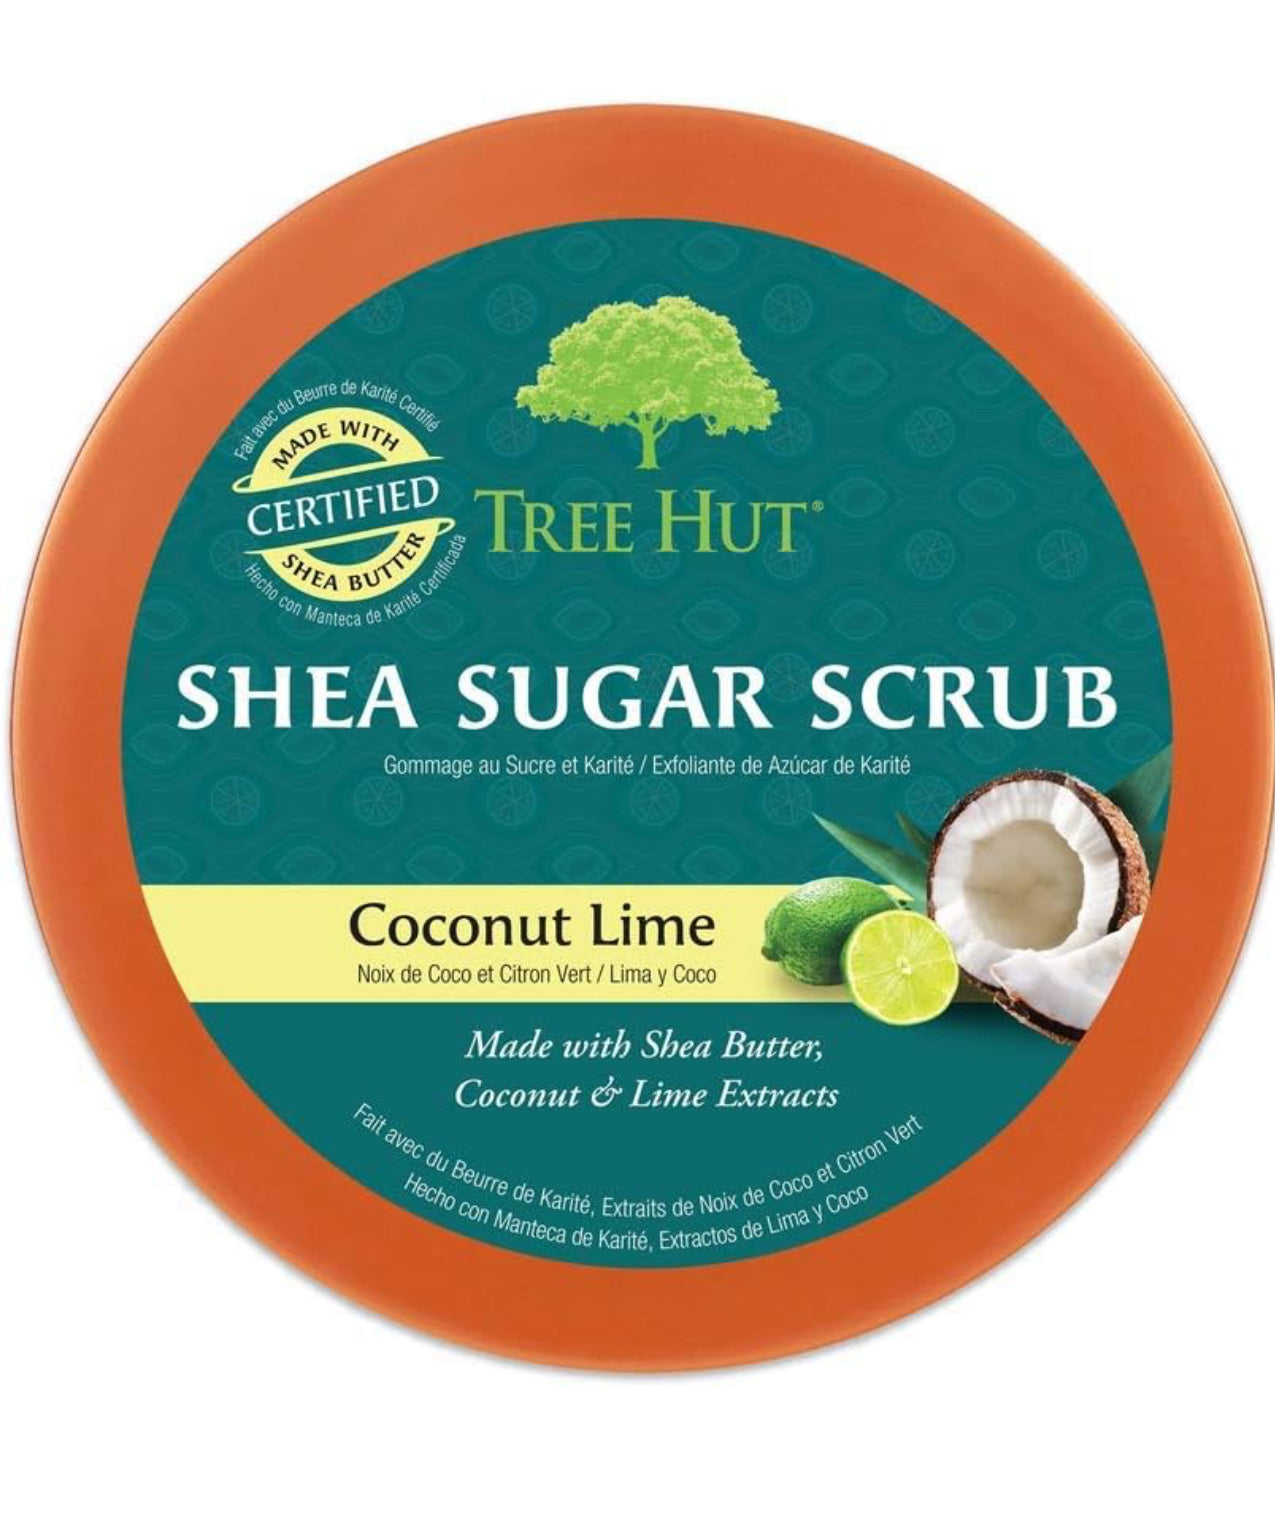 Tree Hut Shea Sugar Scrub, Coconut Lime, 18 Ounce (Pack of 3)